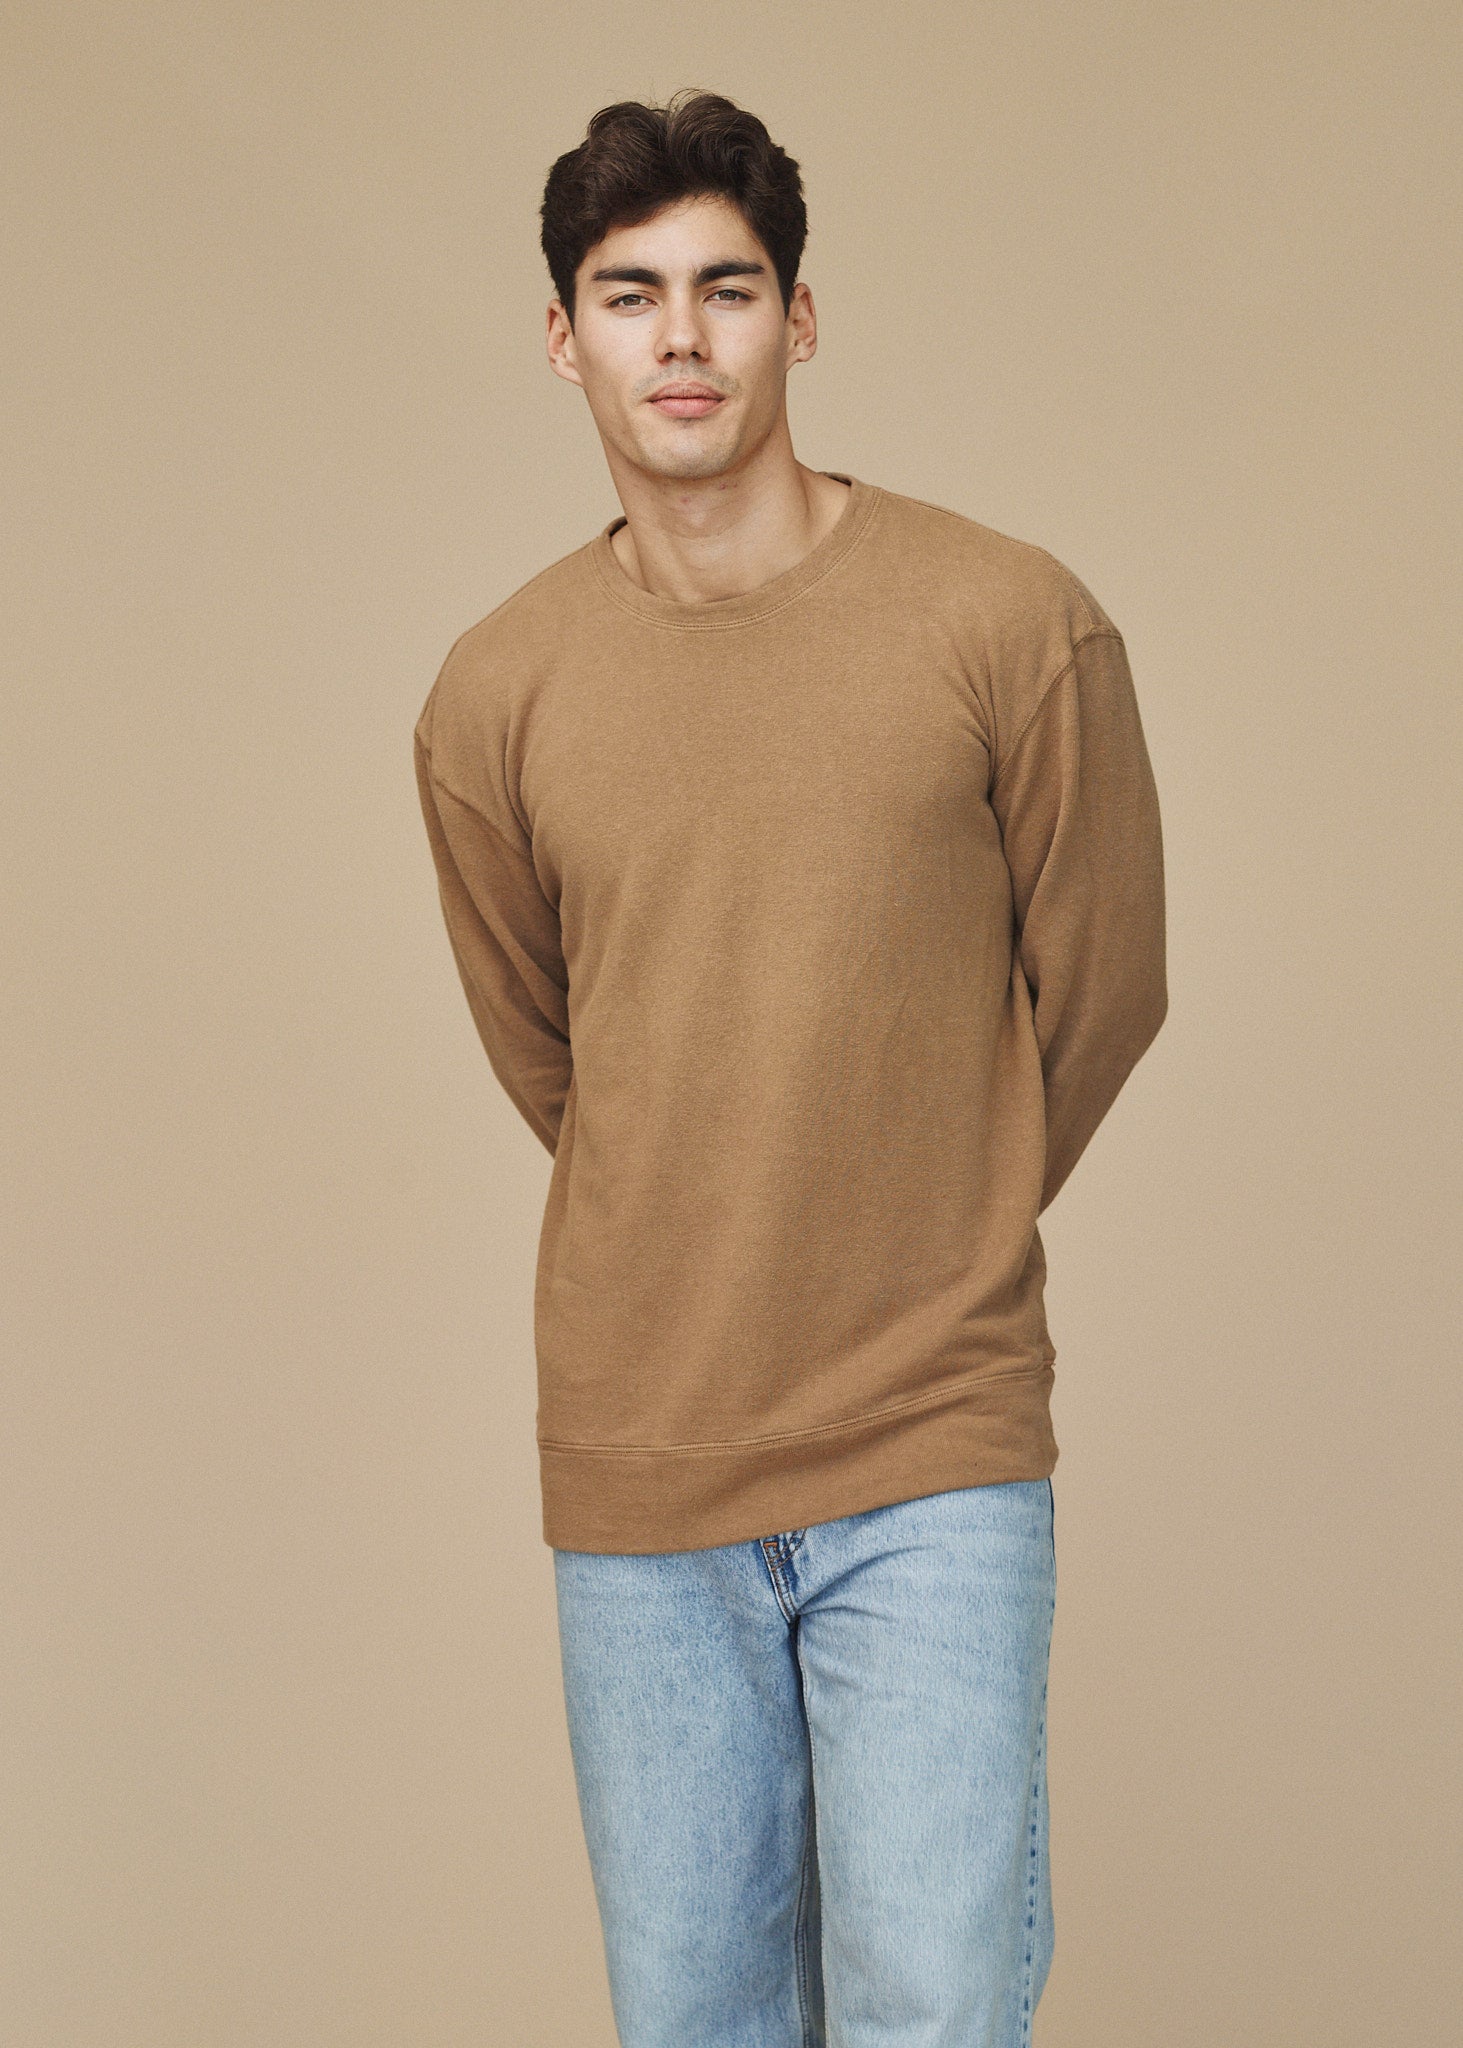 Sweatshirt Hemp | Tahoe Clothing Jungmaven